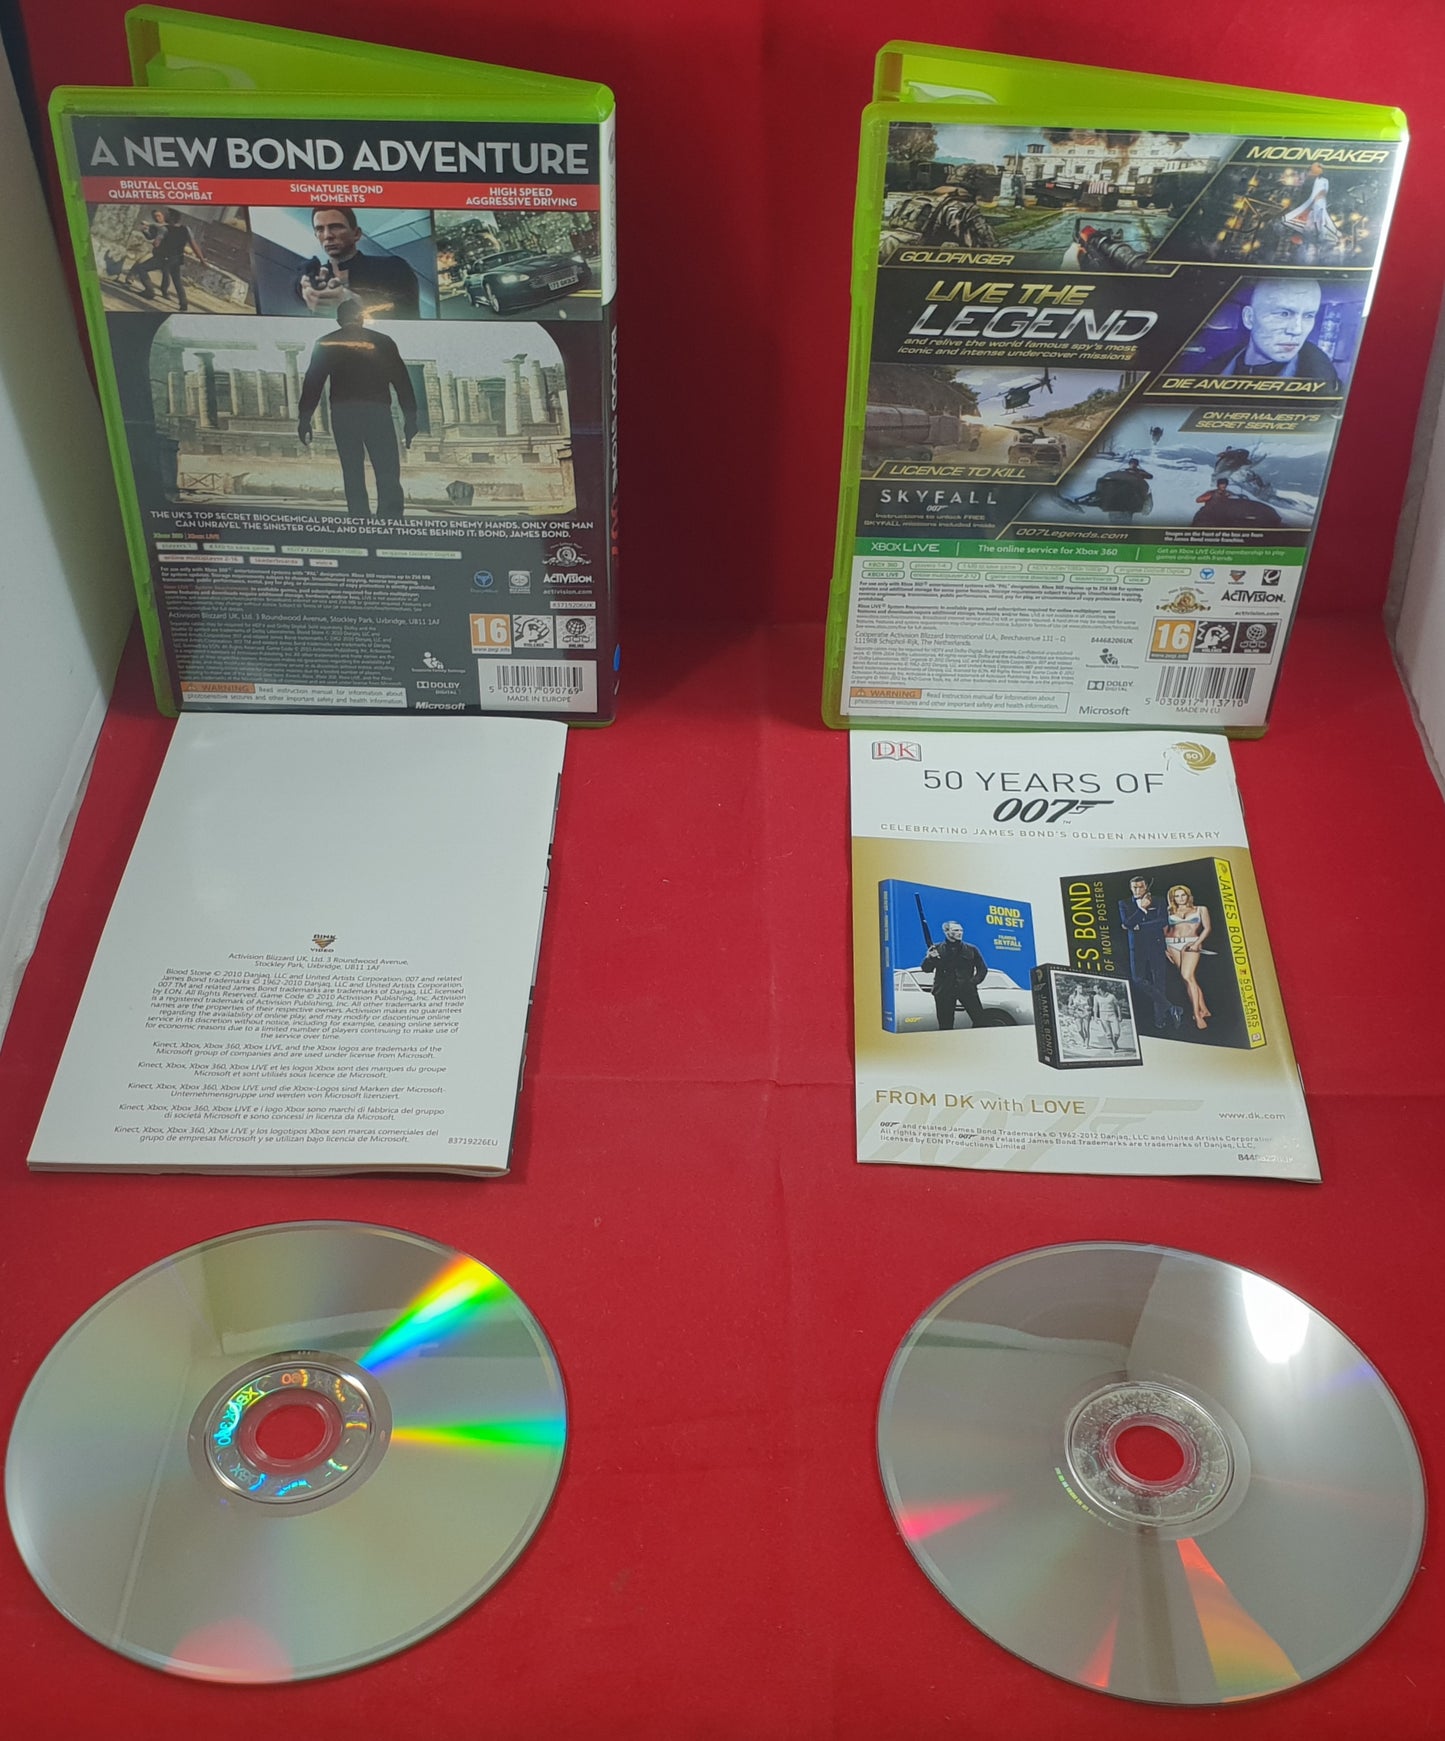 007 Legends & Blood Stone Microsoft Xbox 360 Game Bundle